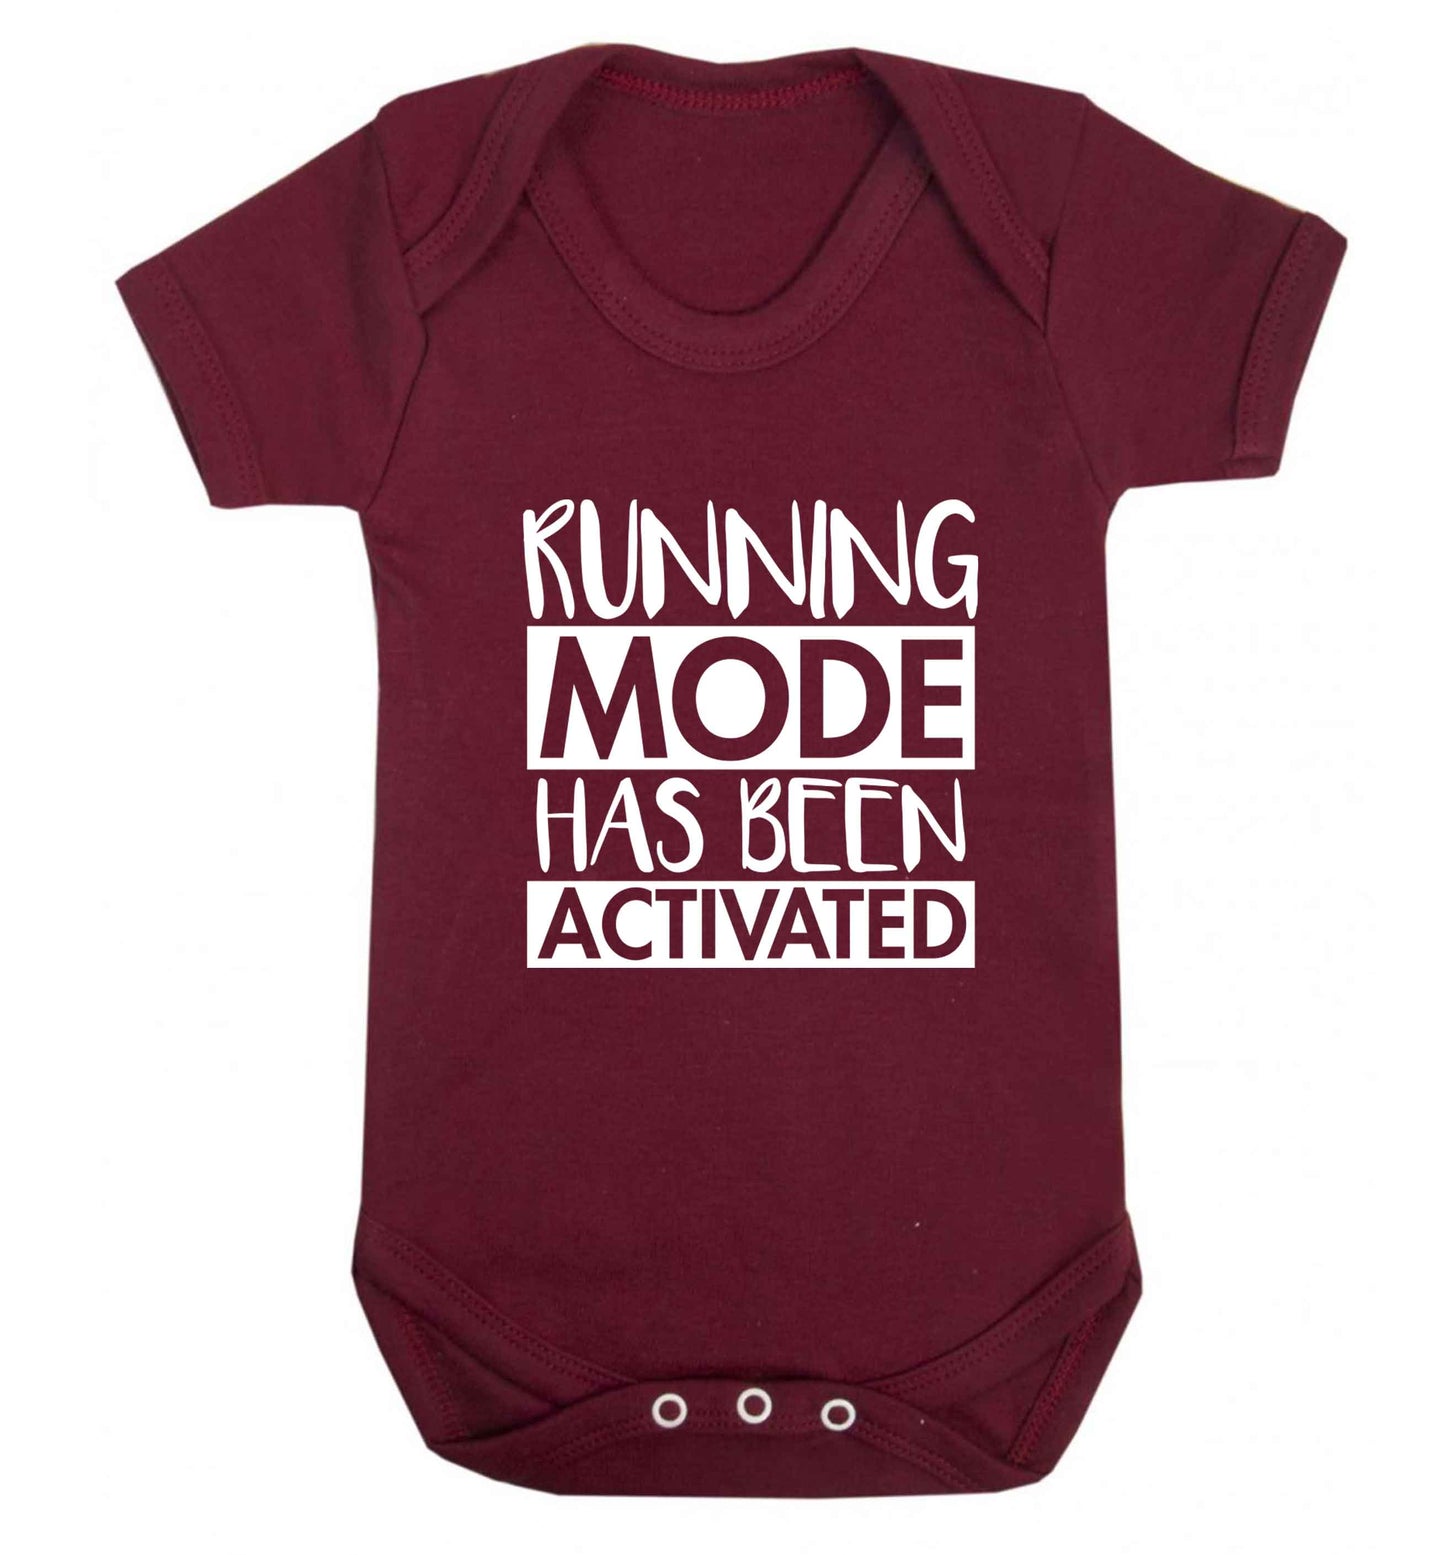 Running mode has been activated baby vest maroon 18-24 months